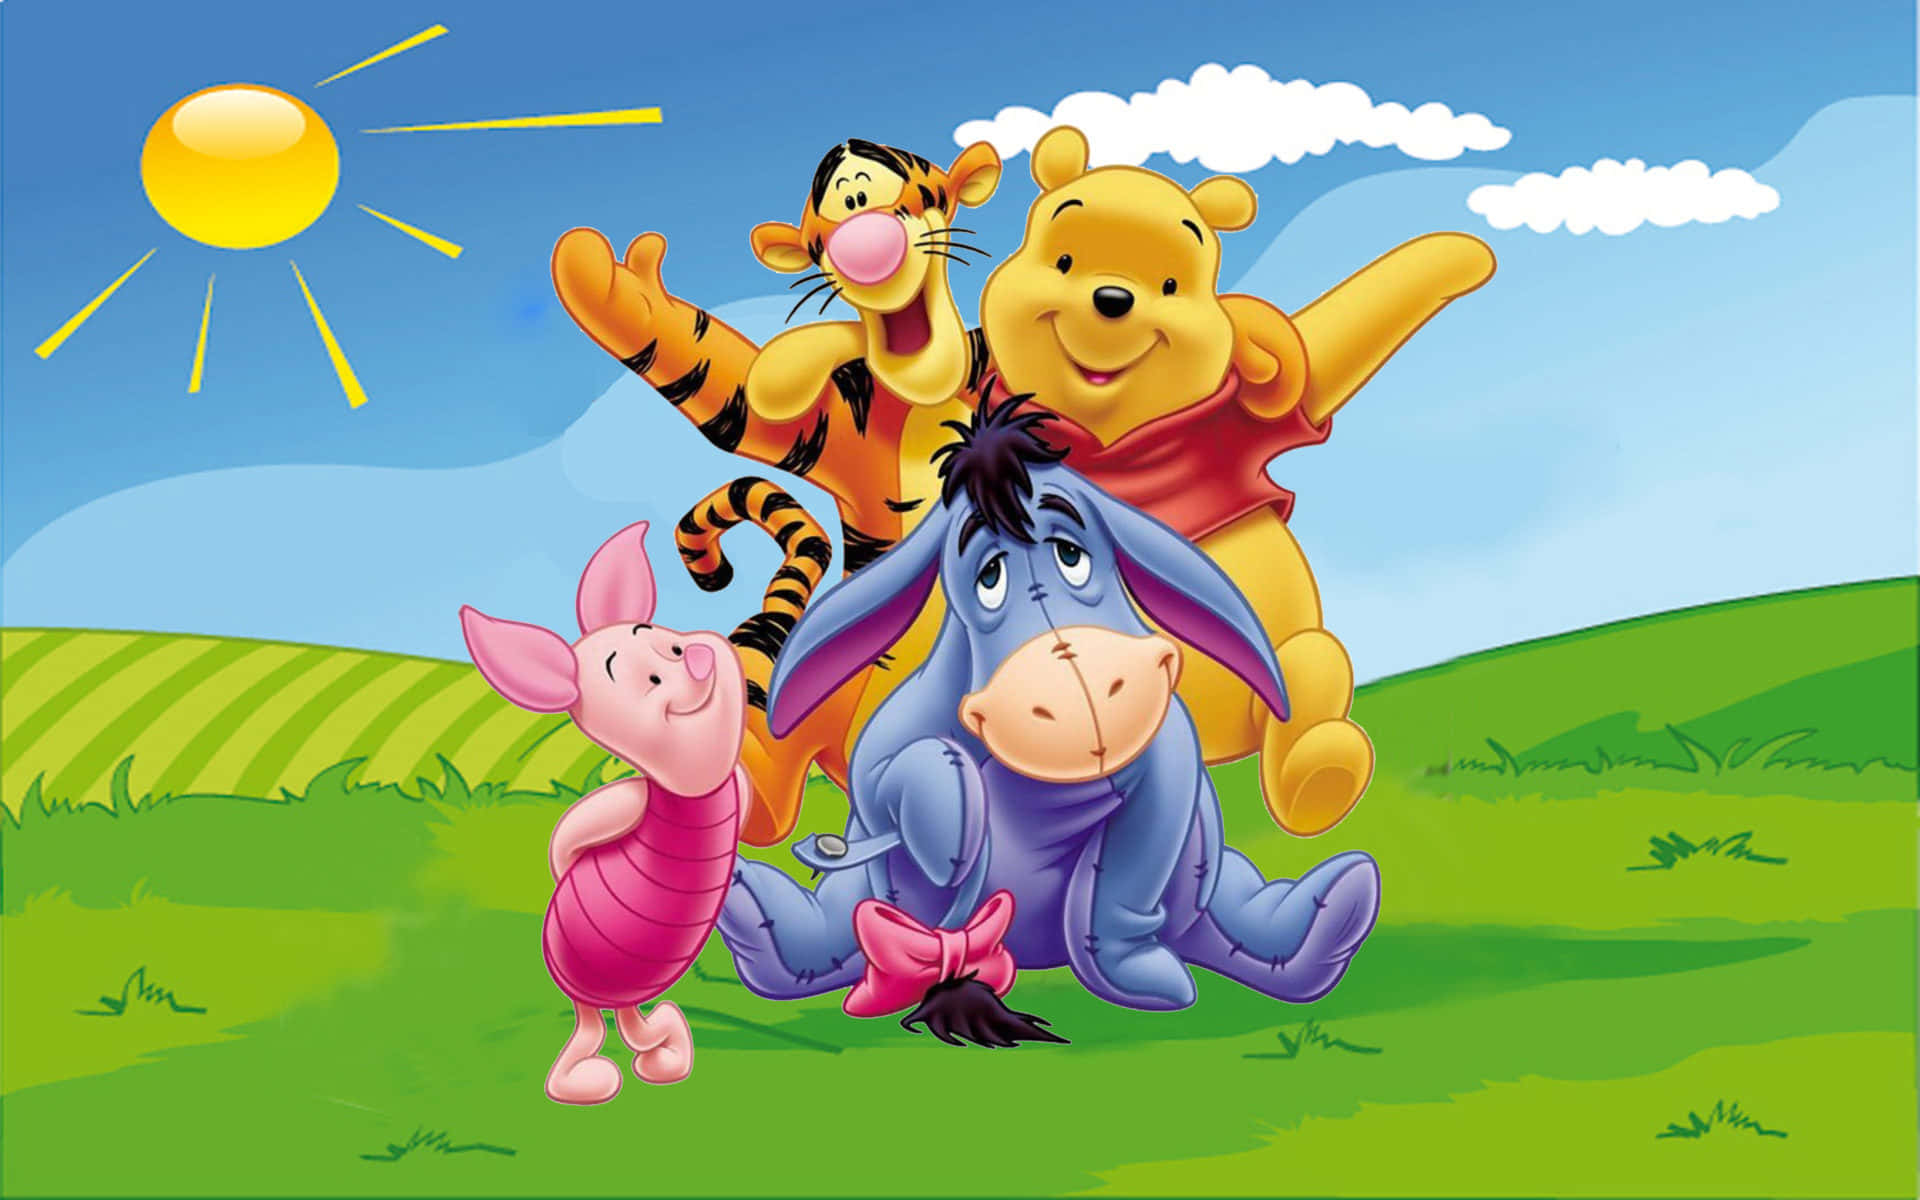 Free Winnie The Pooh Desktop Wallpaper Downloads, [100+] Winnie The Pooh  Desktop Wallpapers for FREE 